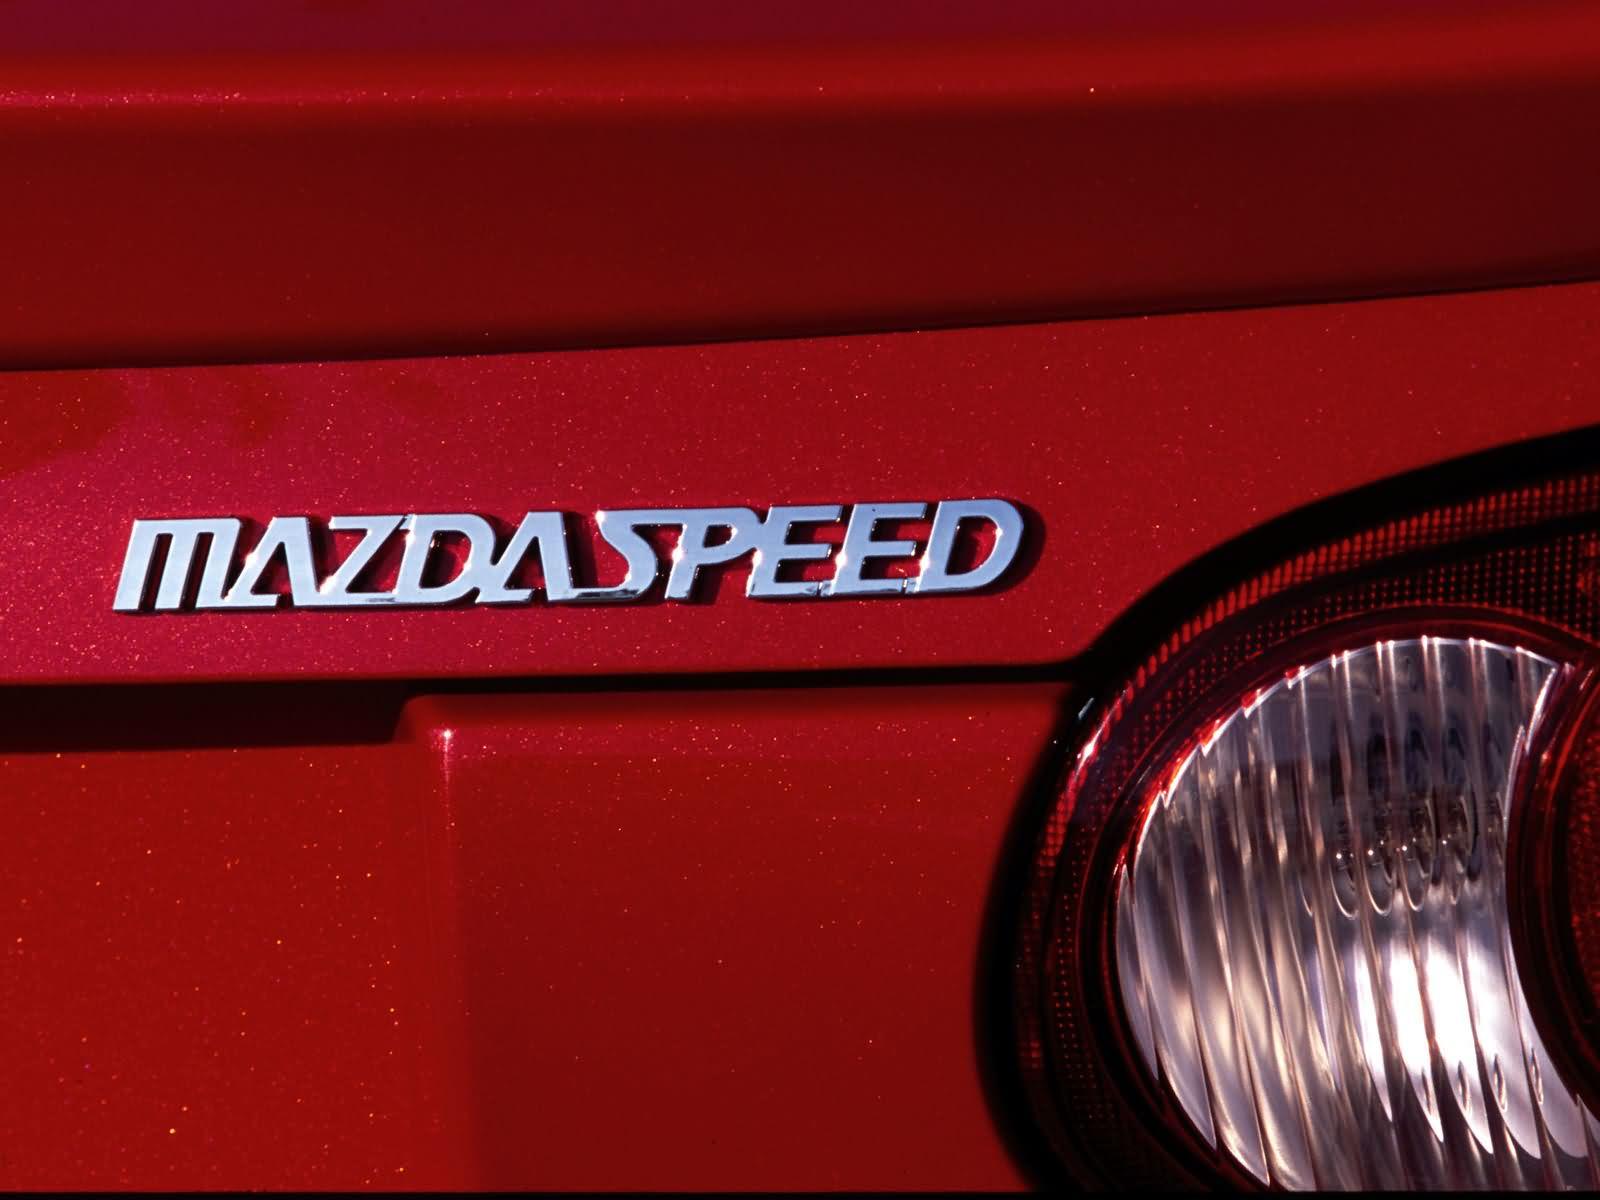 MazdaSpeed MX 5 Picture # 21607. MazdaSpeed Photo Gallery